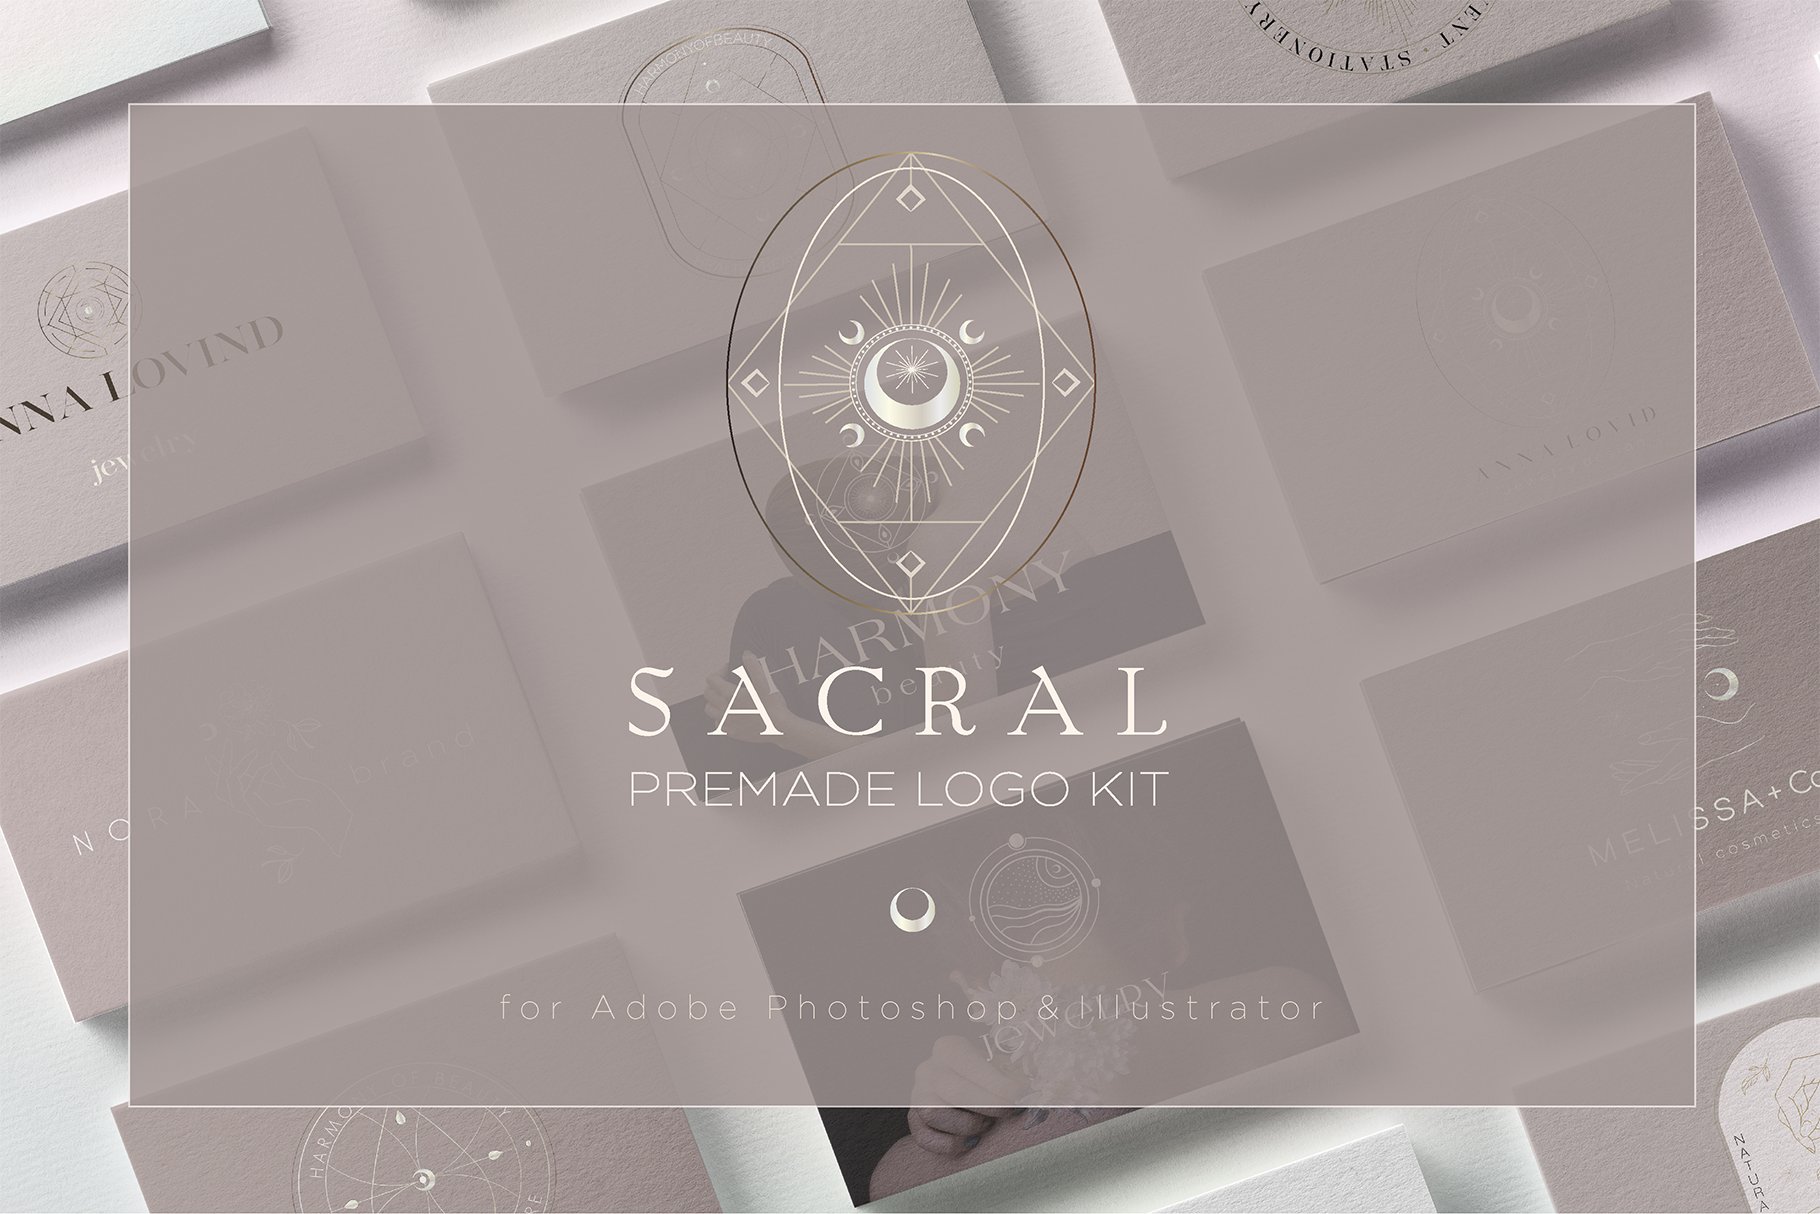 Sacral- Brand Kit cover image.